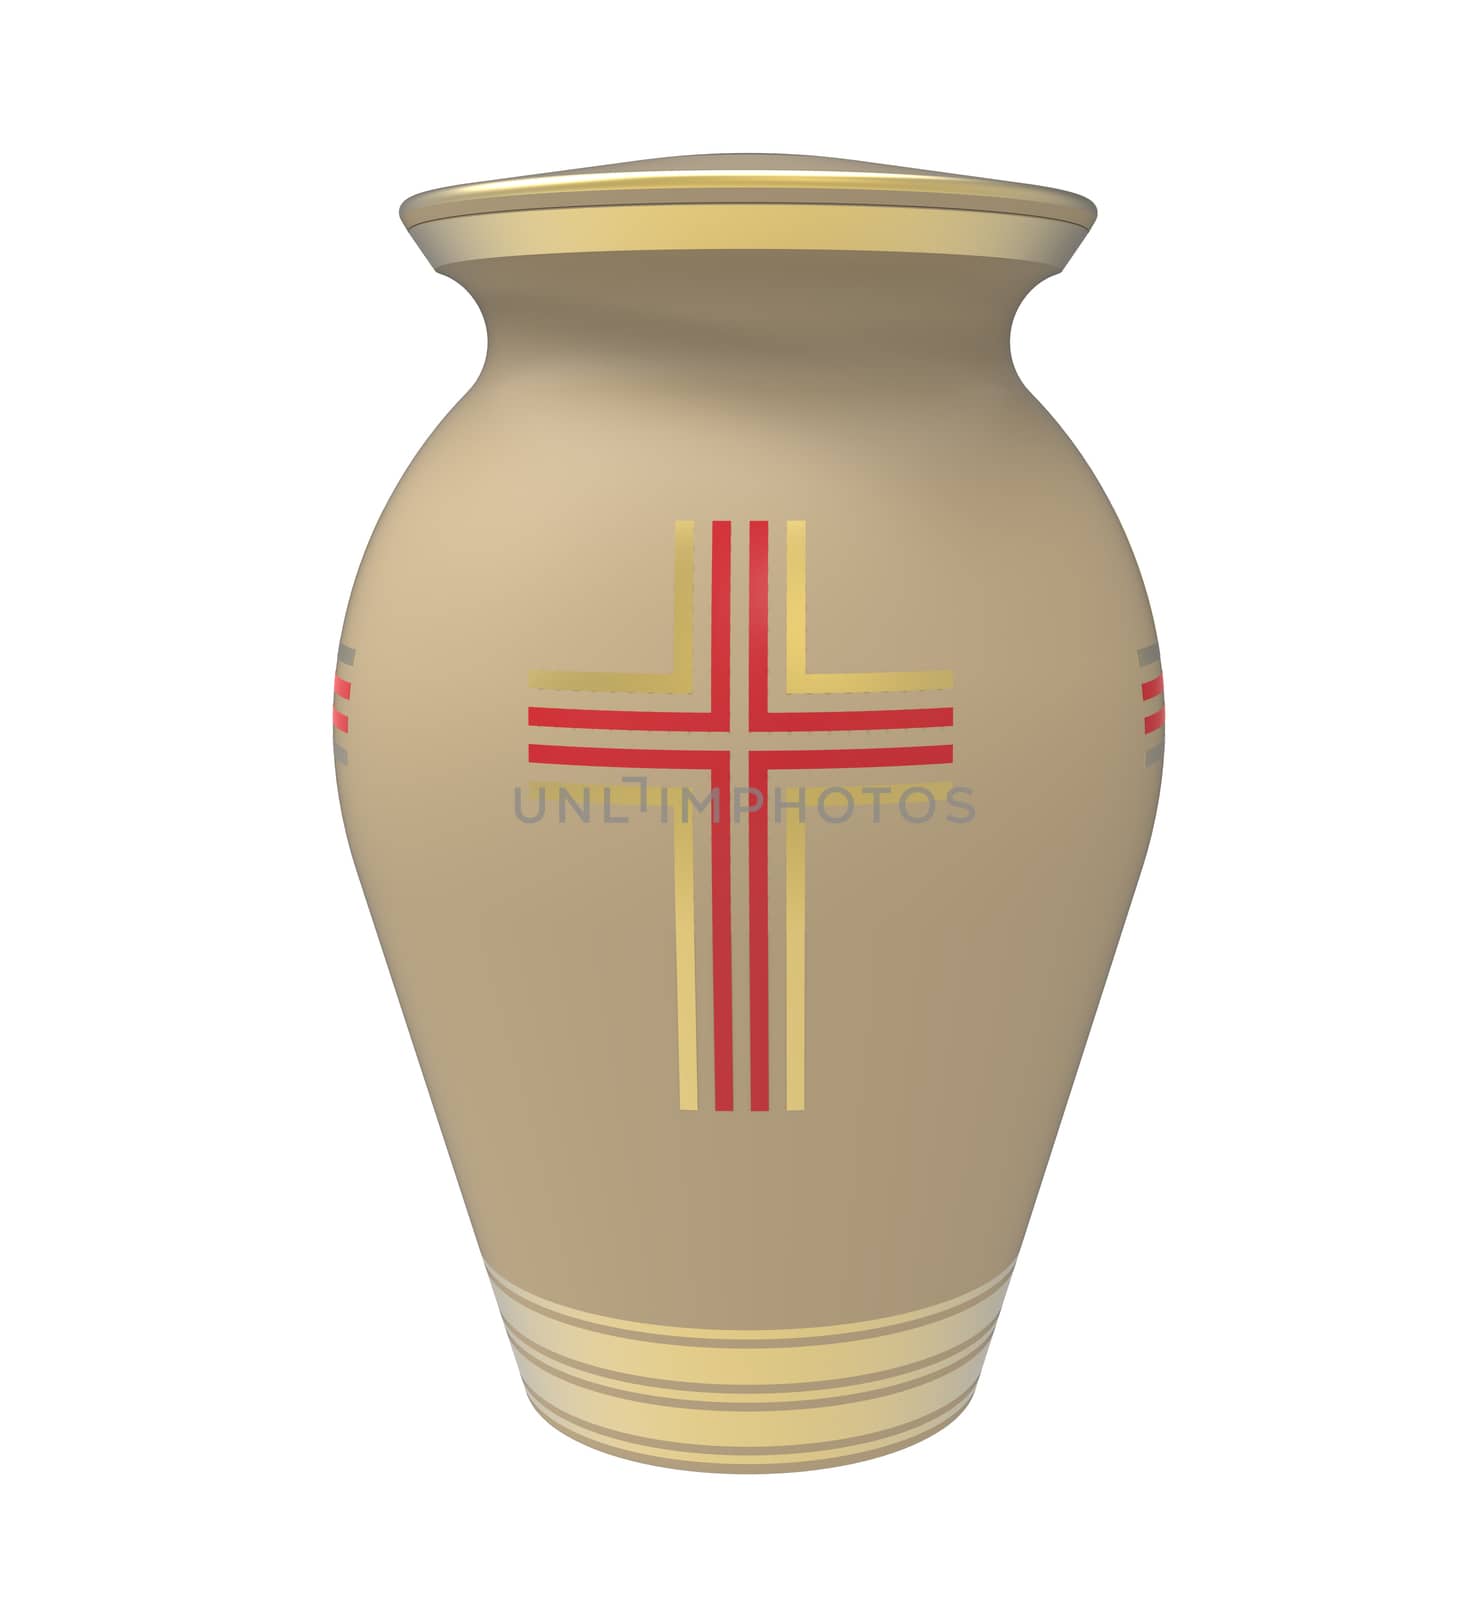 Cremation urn by Boris15